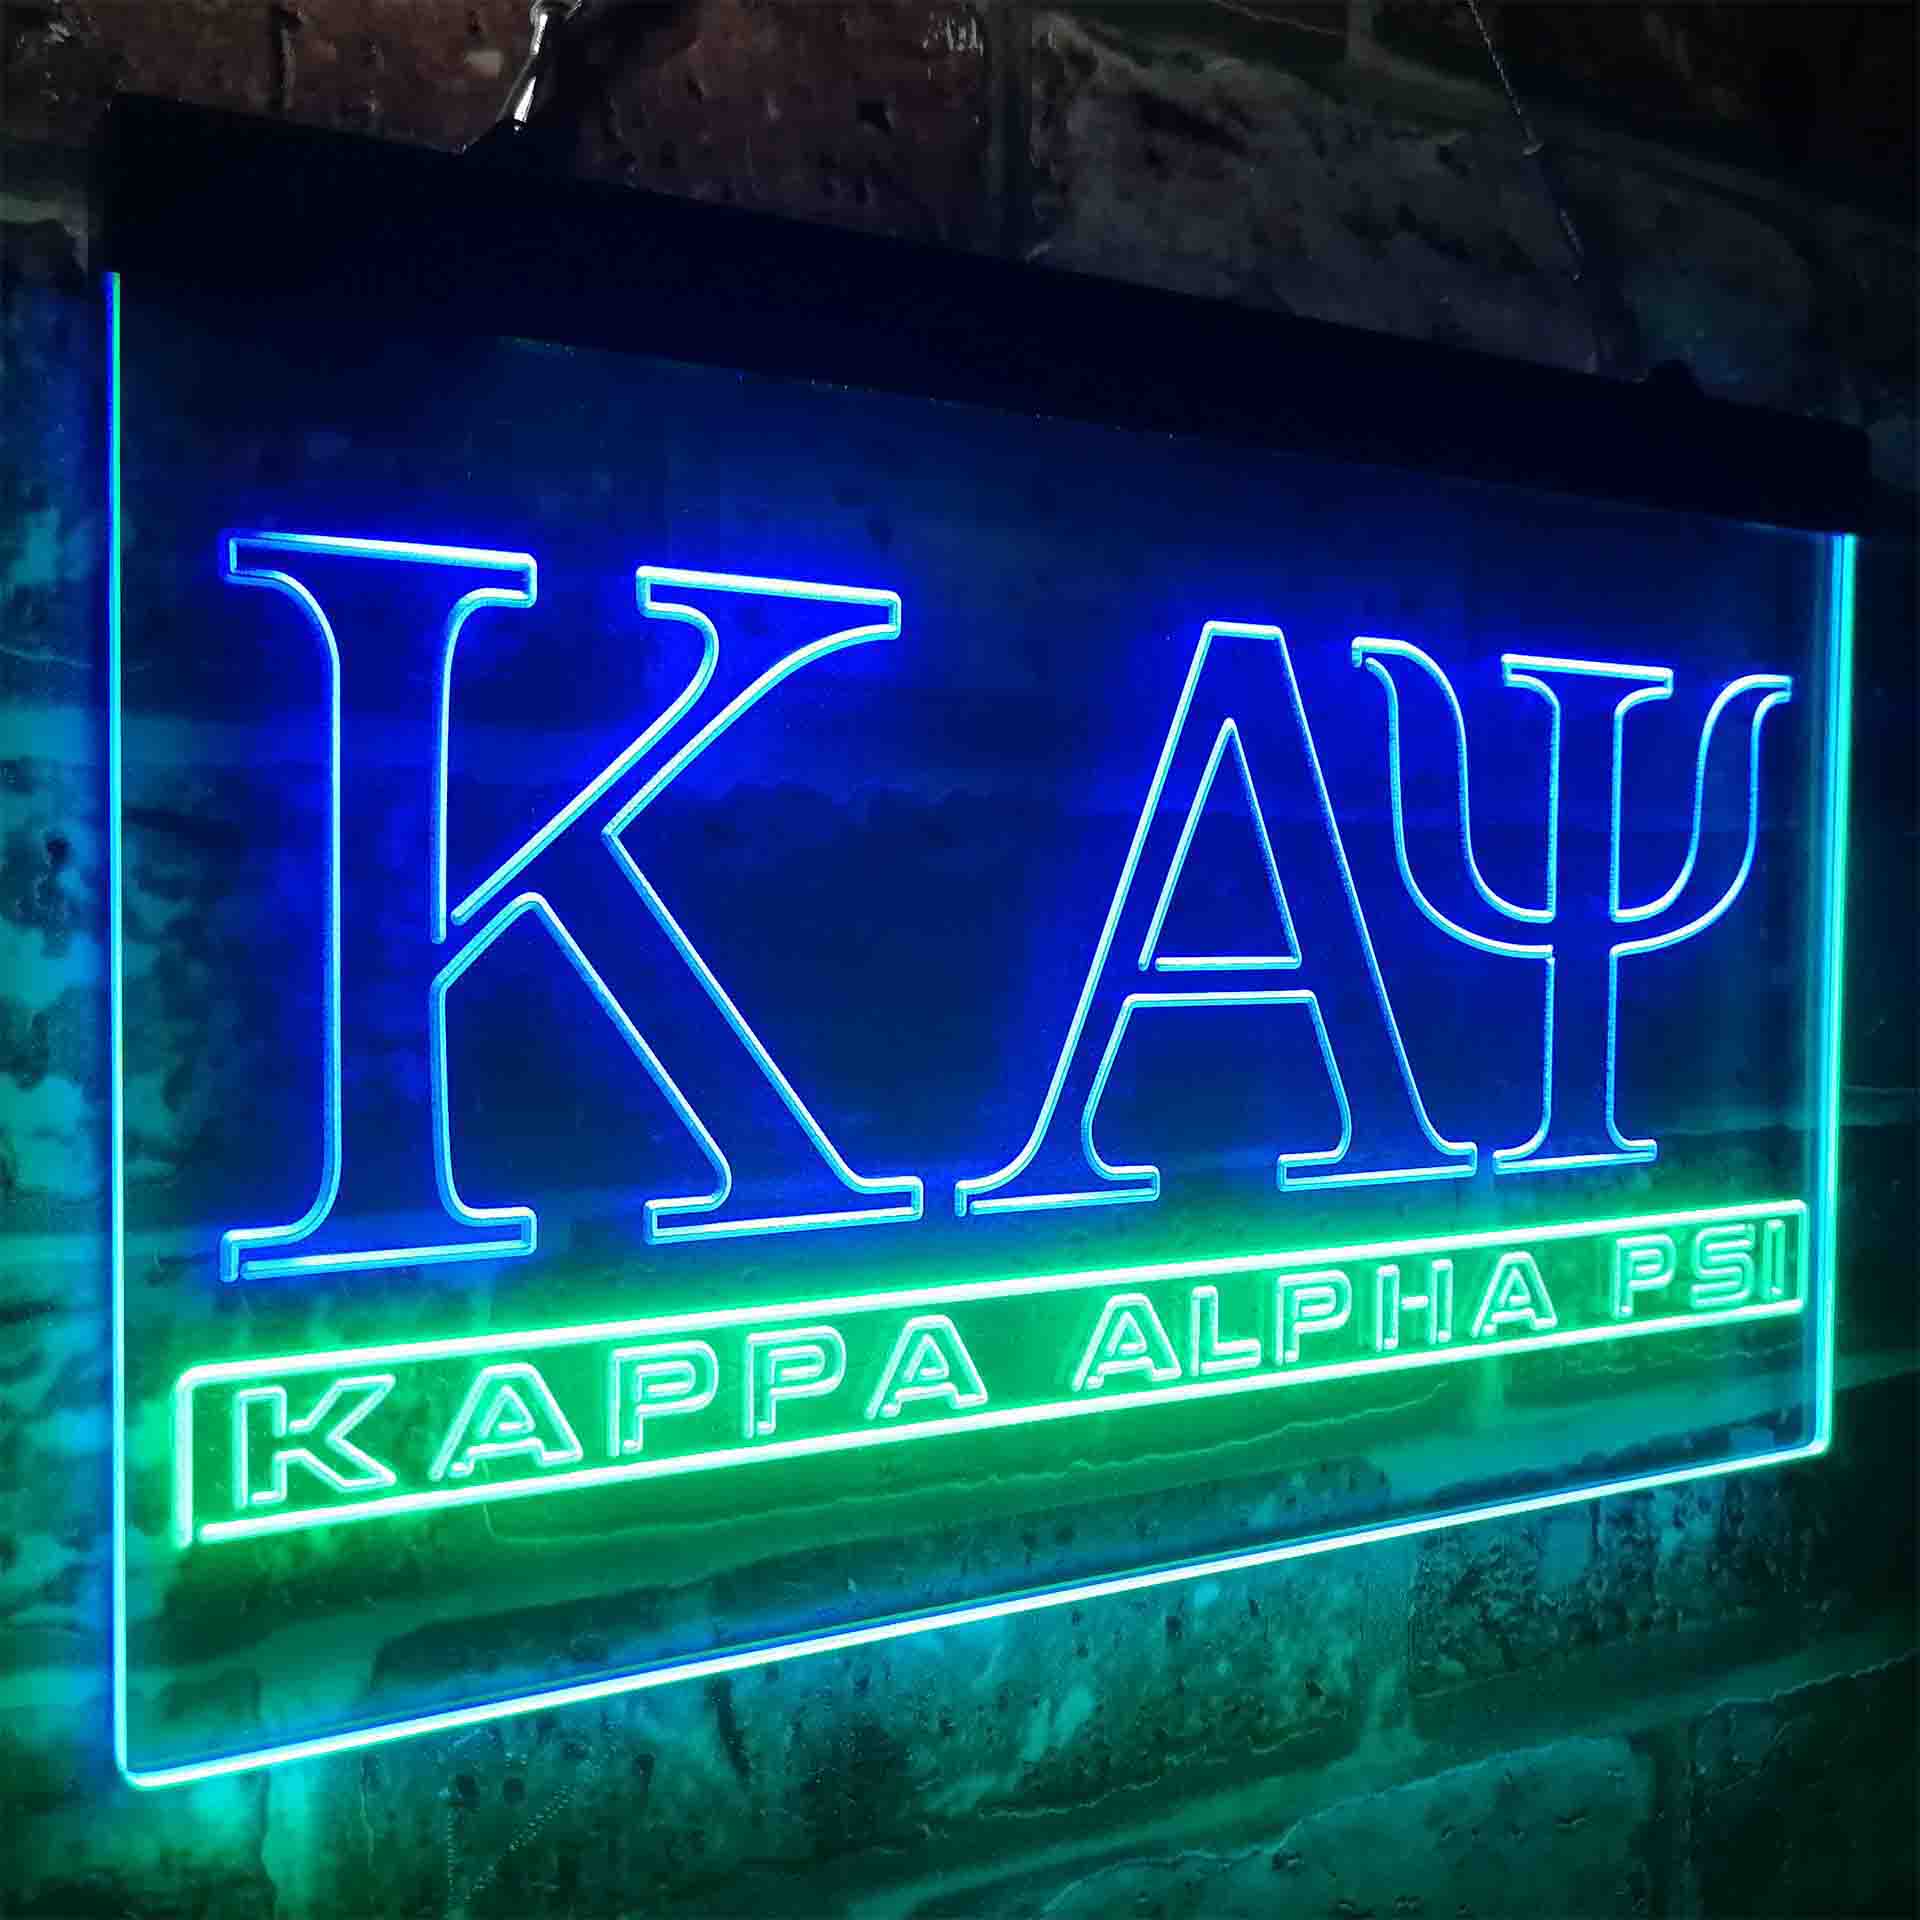 Kappa Alpha Psi Fraternity Greek Letter Organization Neon-Like LED Sign